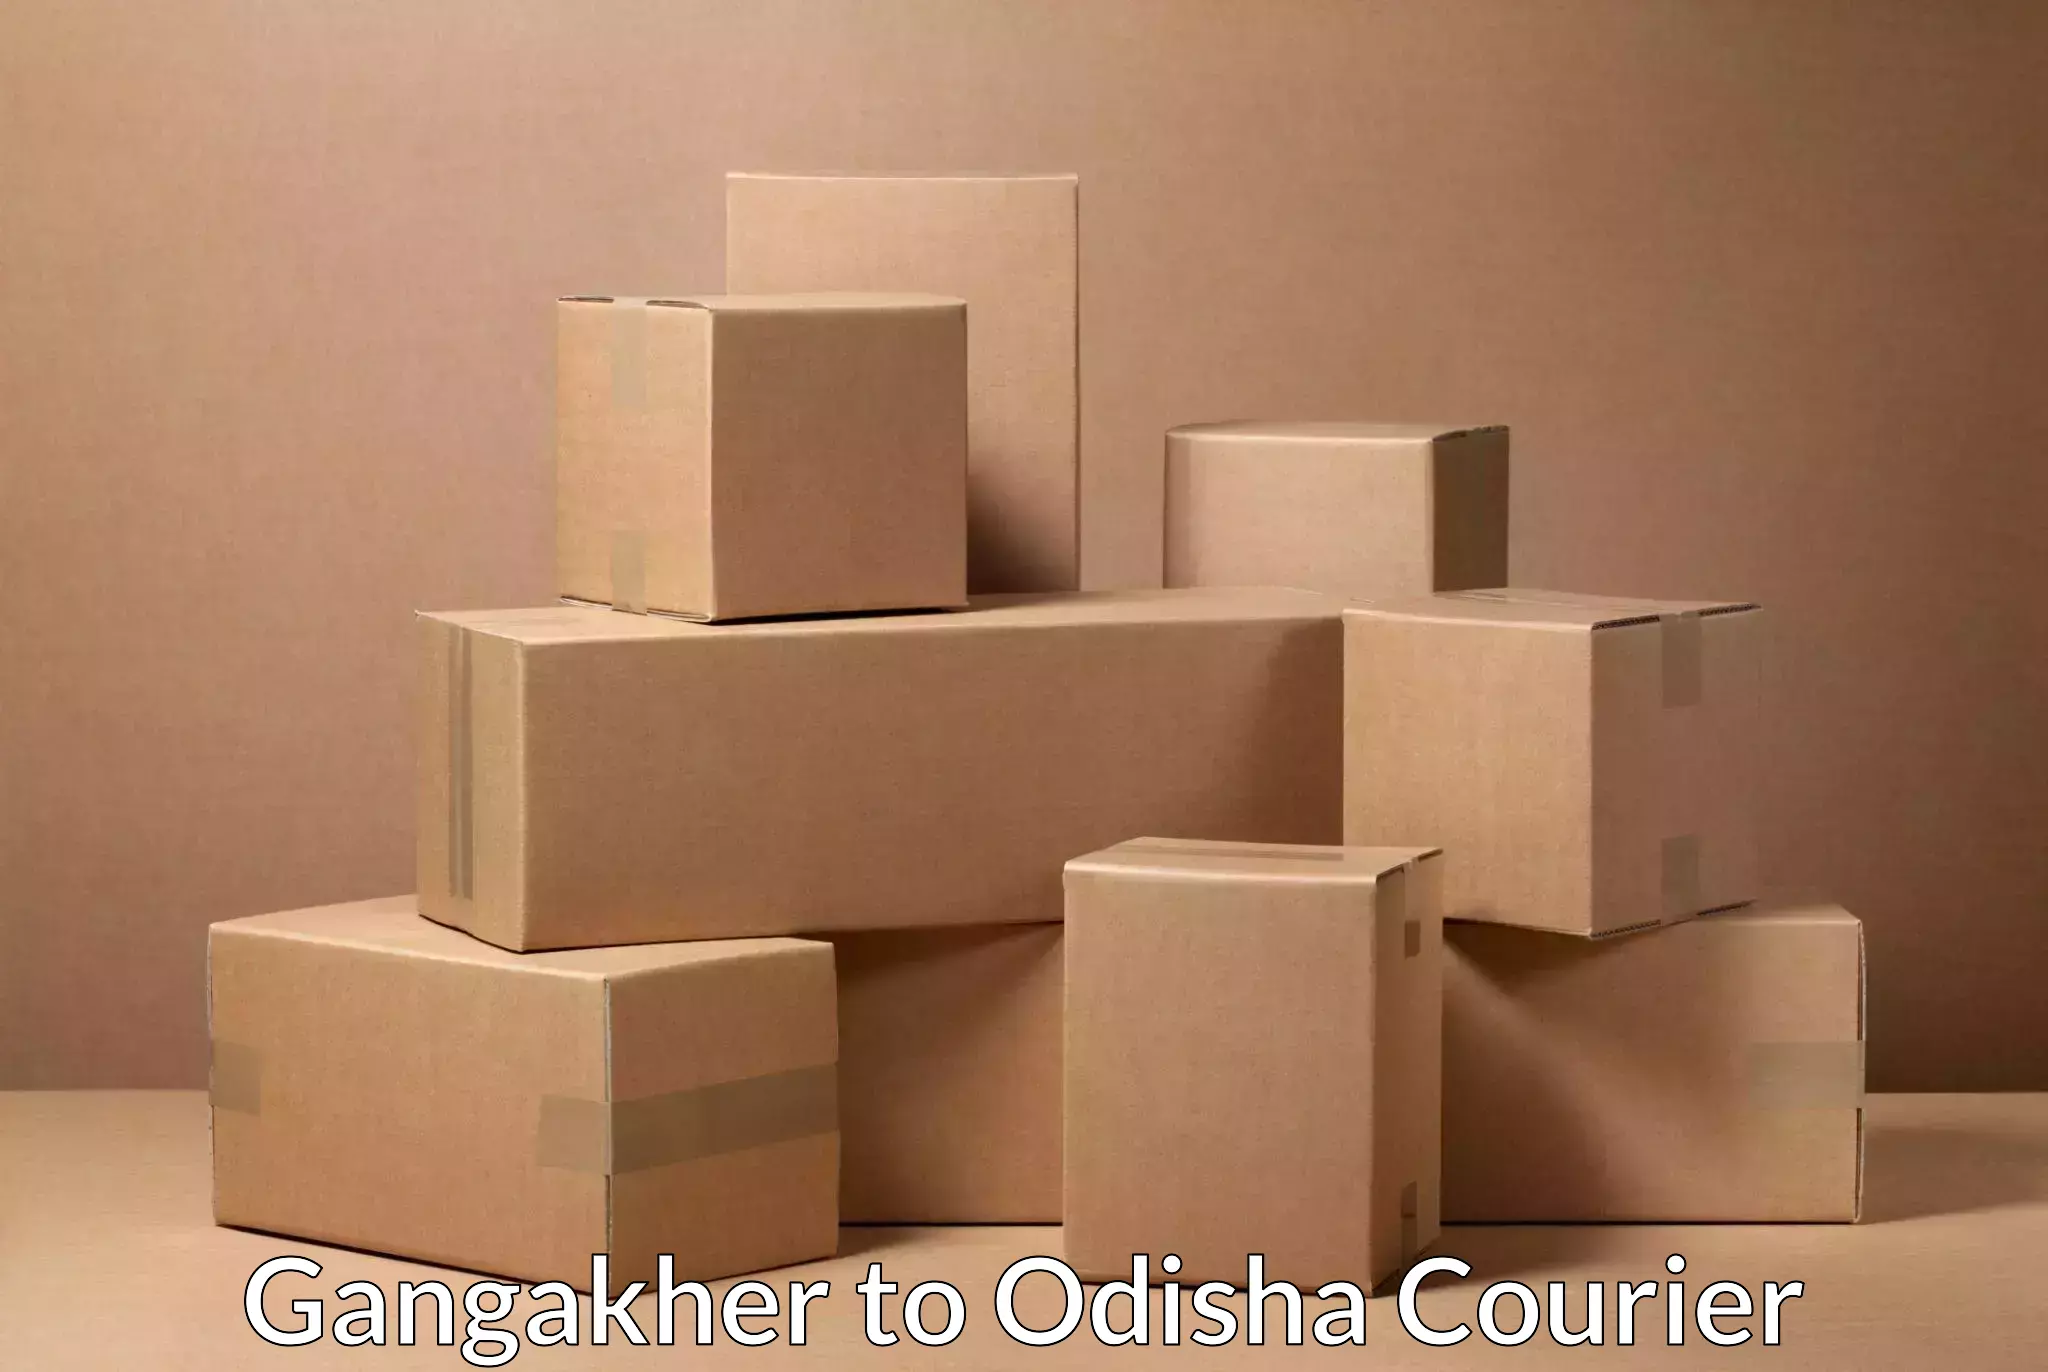 Subscription-based courier Gangakher to Puranakatak